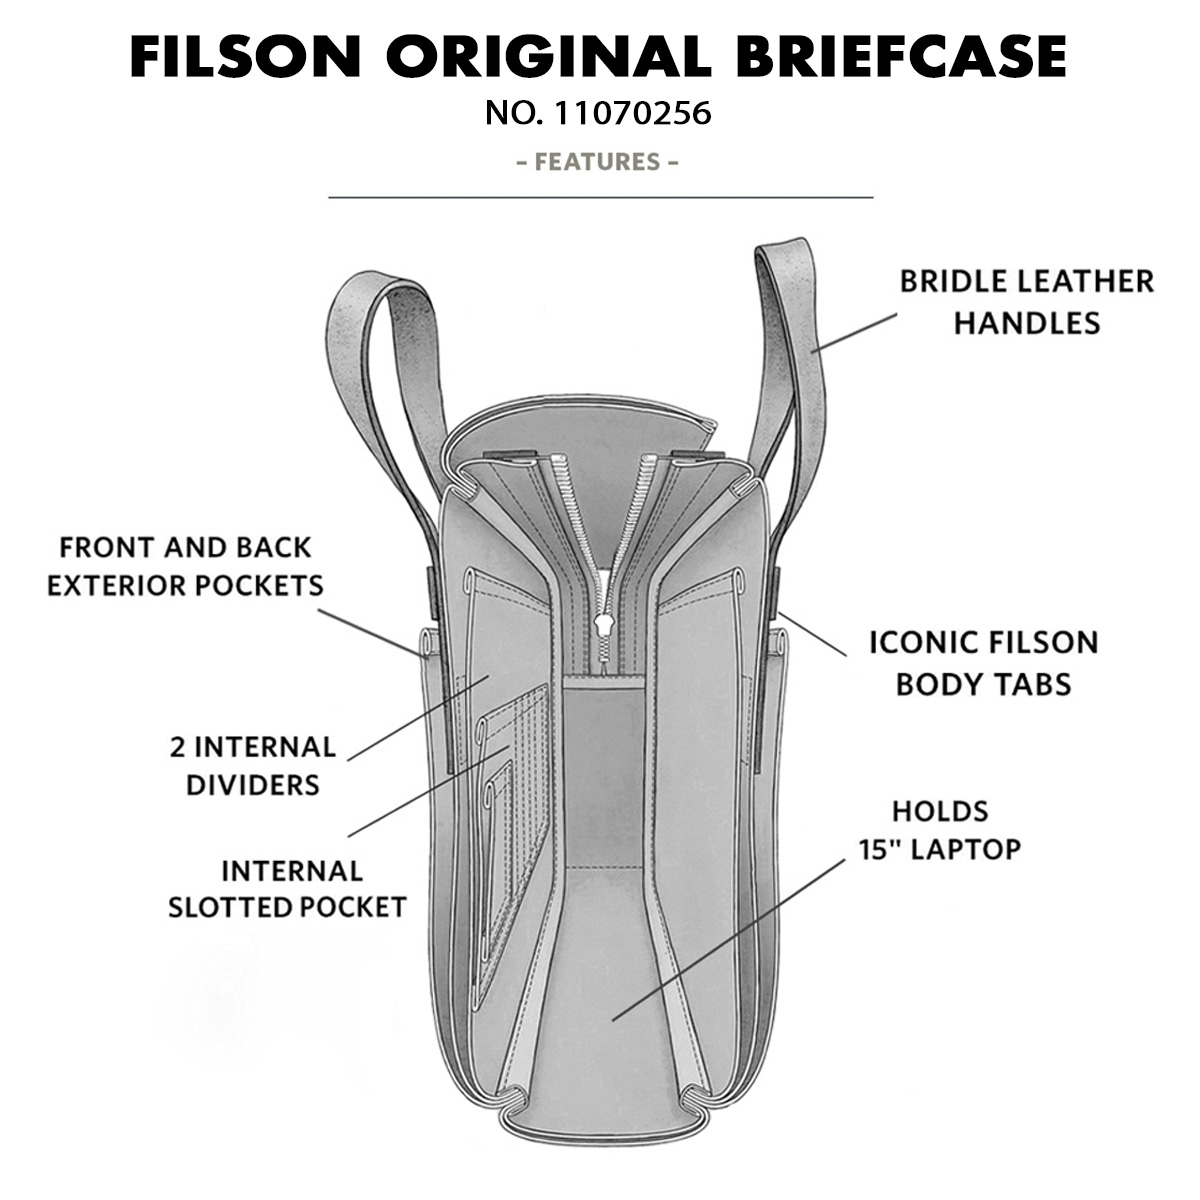 Filson Original Briefcase, features